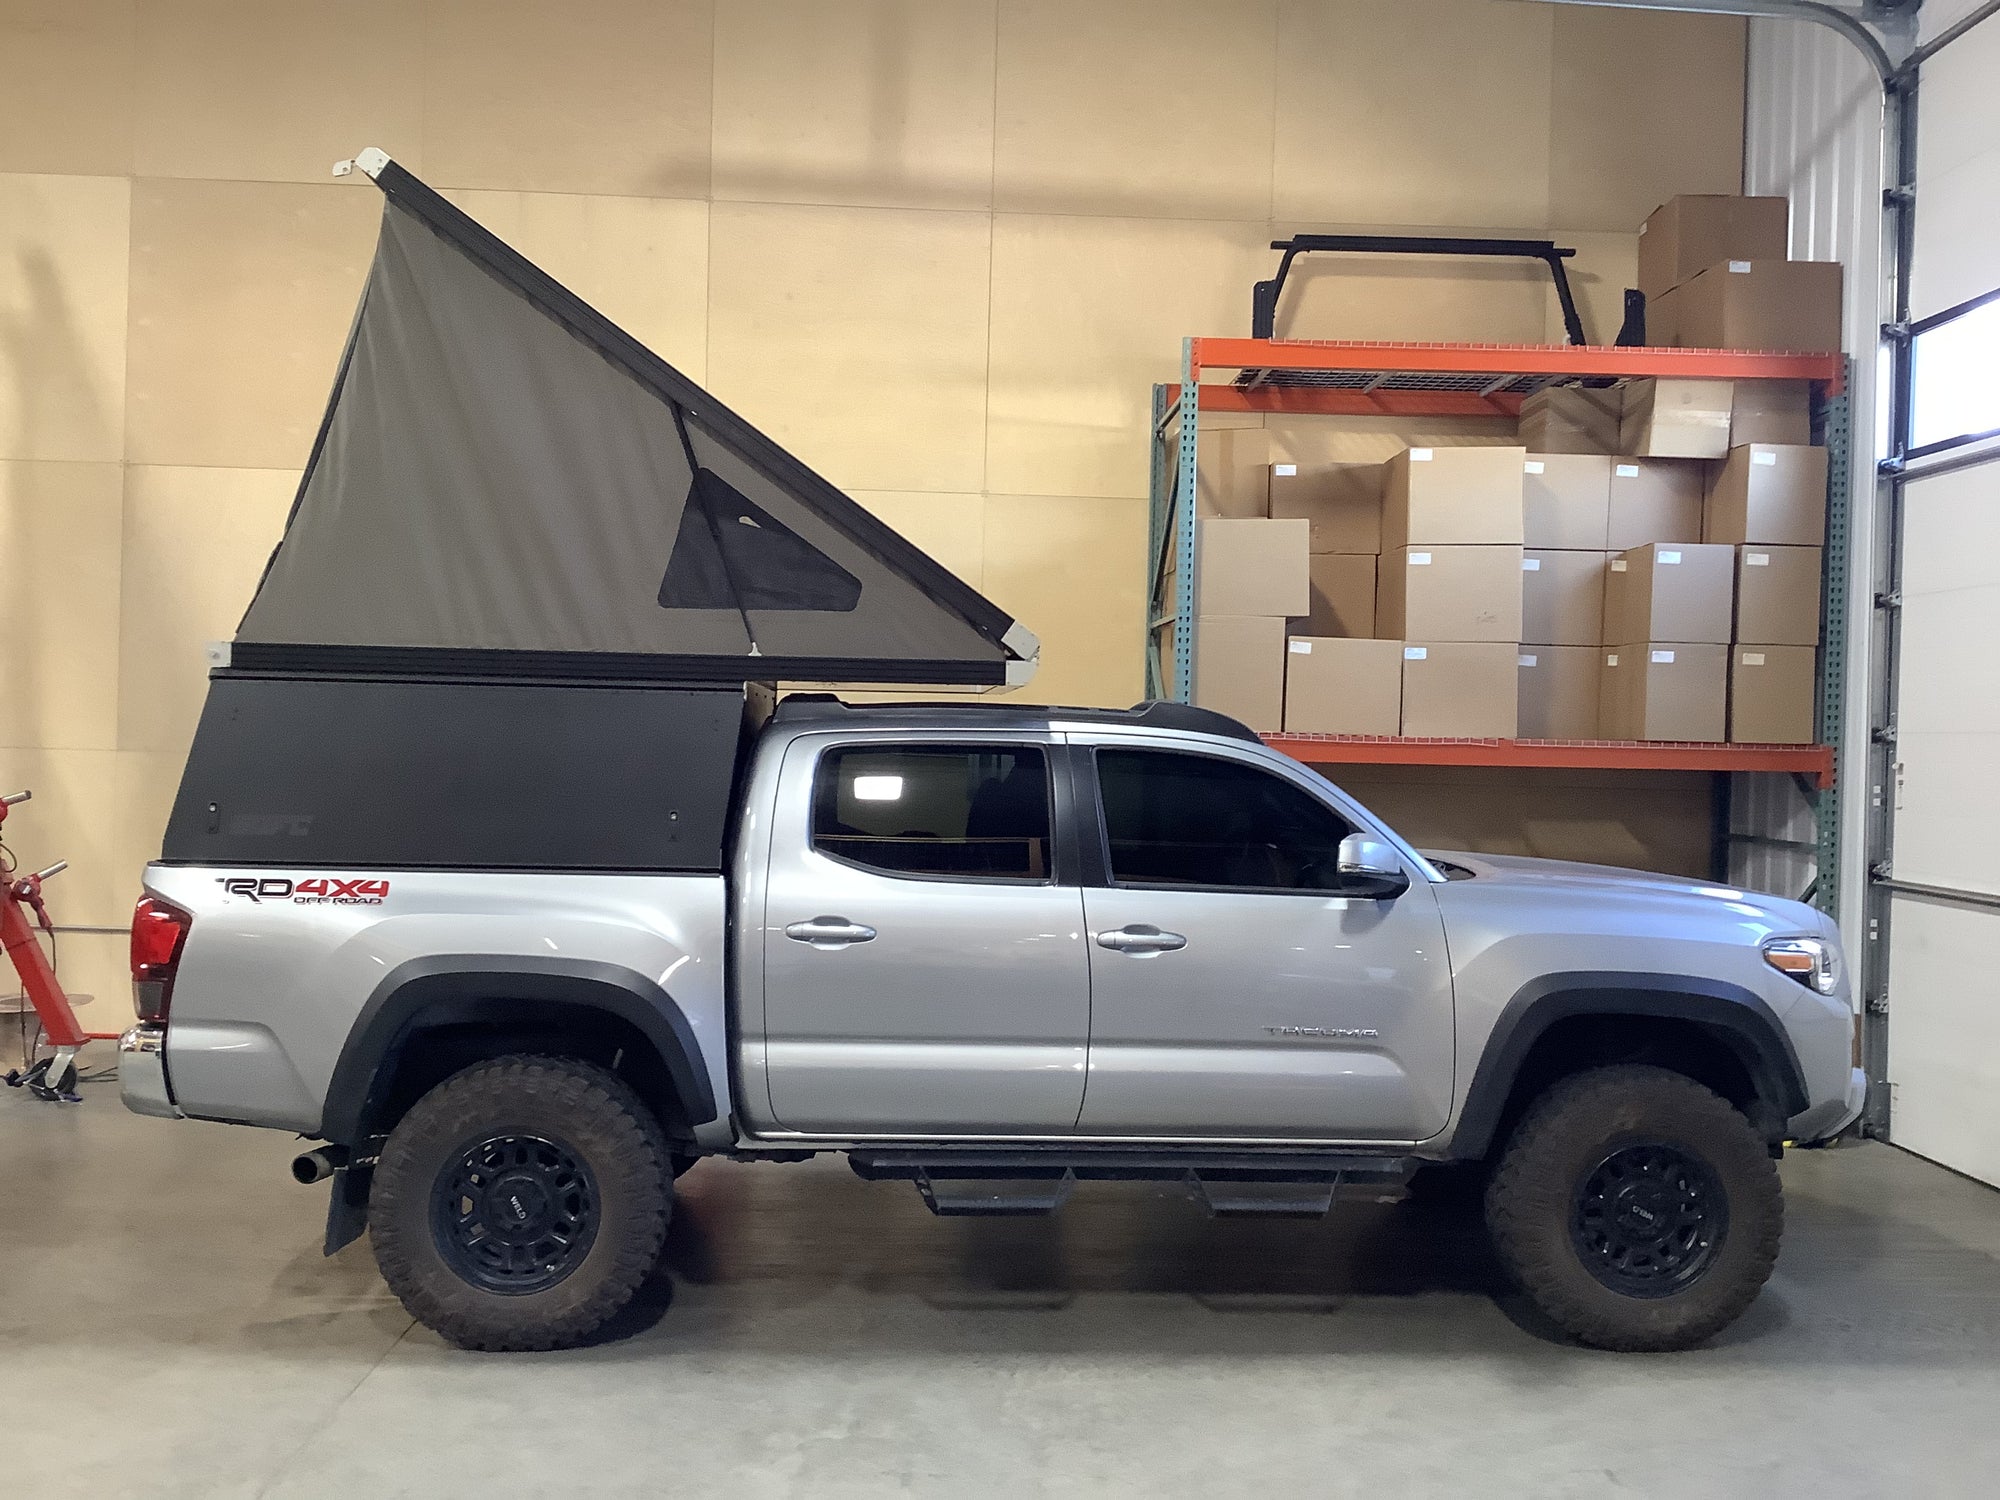 2019 Toyota Tacoma Camper - Build #3662